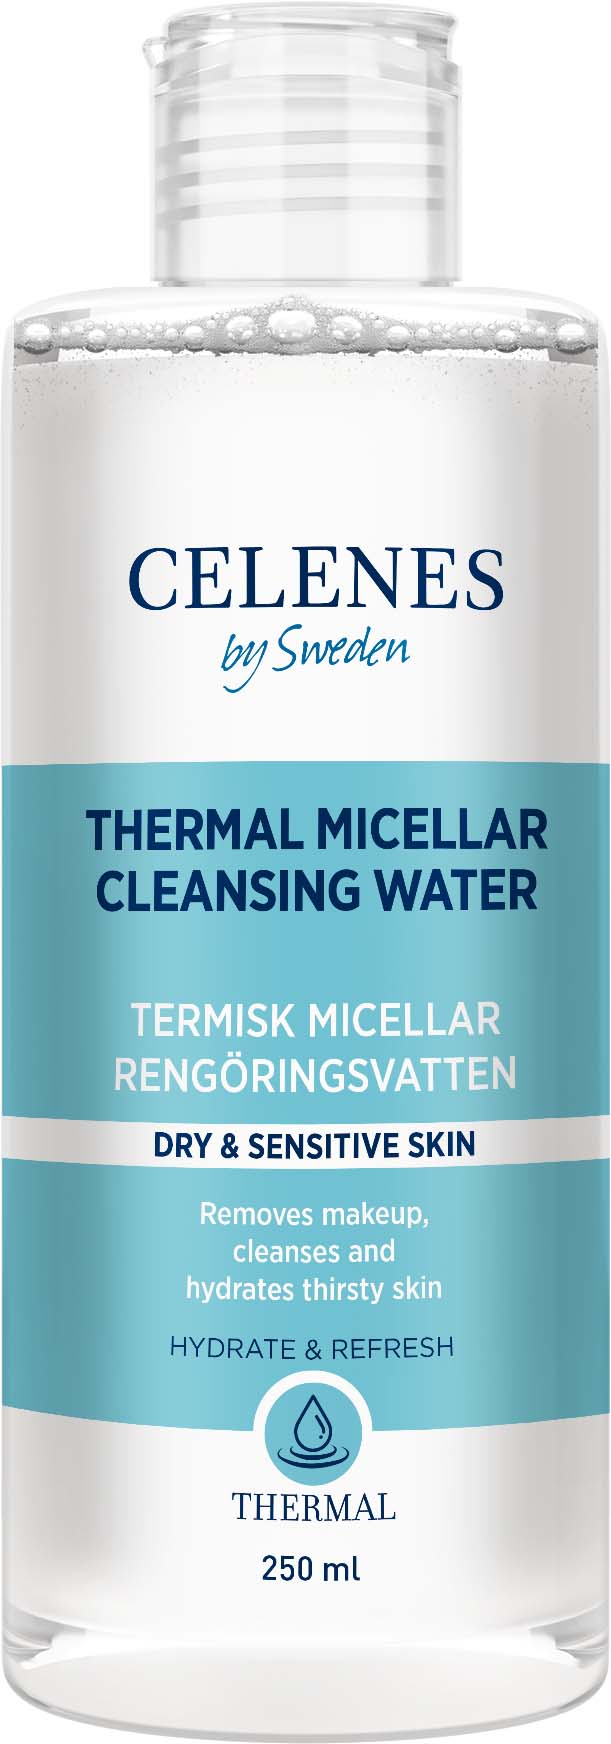 Celenes Thermal Cleansing Water Dry & Sensitive Skin- 250 ml